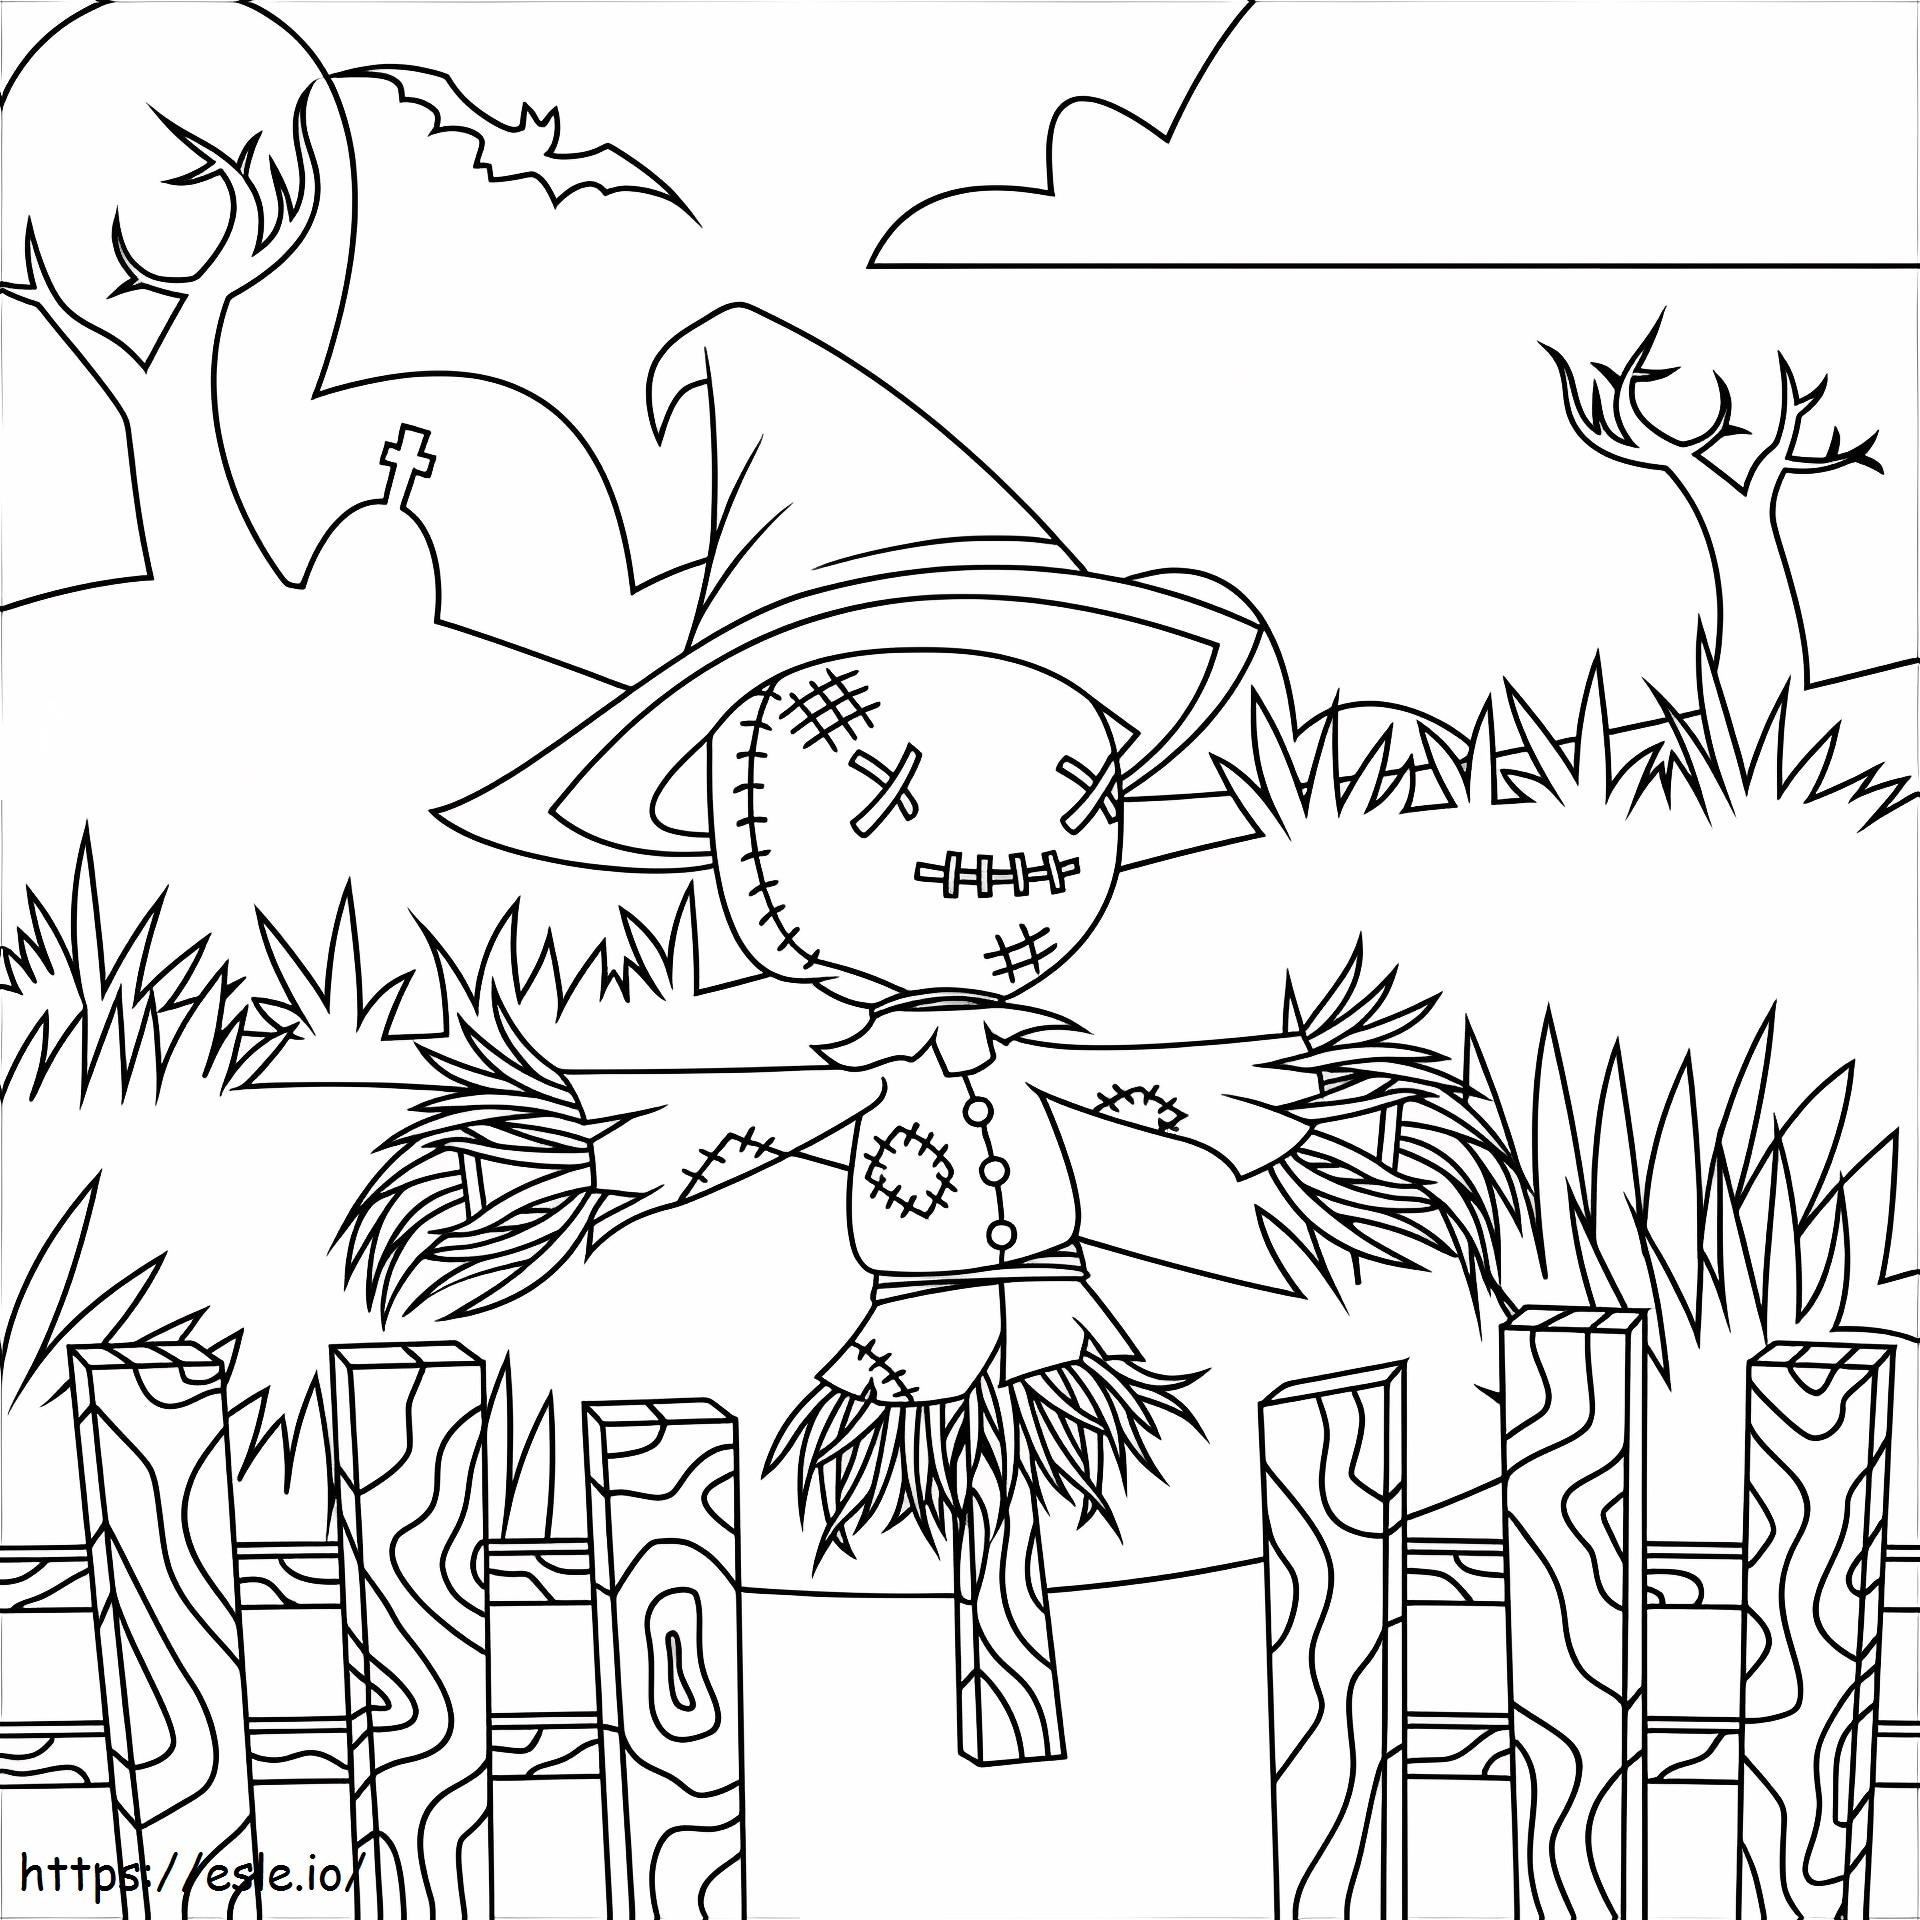 Big Scarecrow coloring page